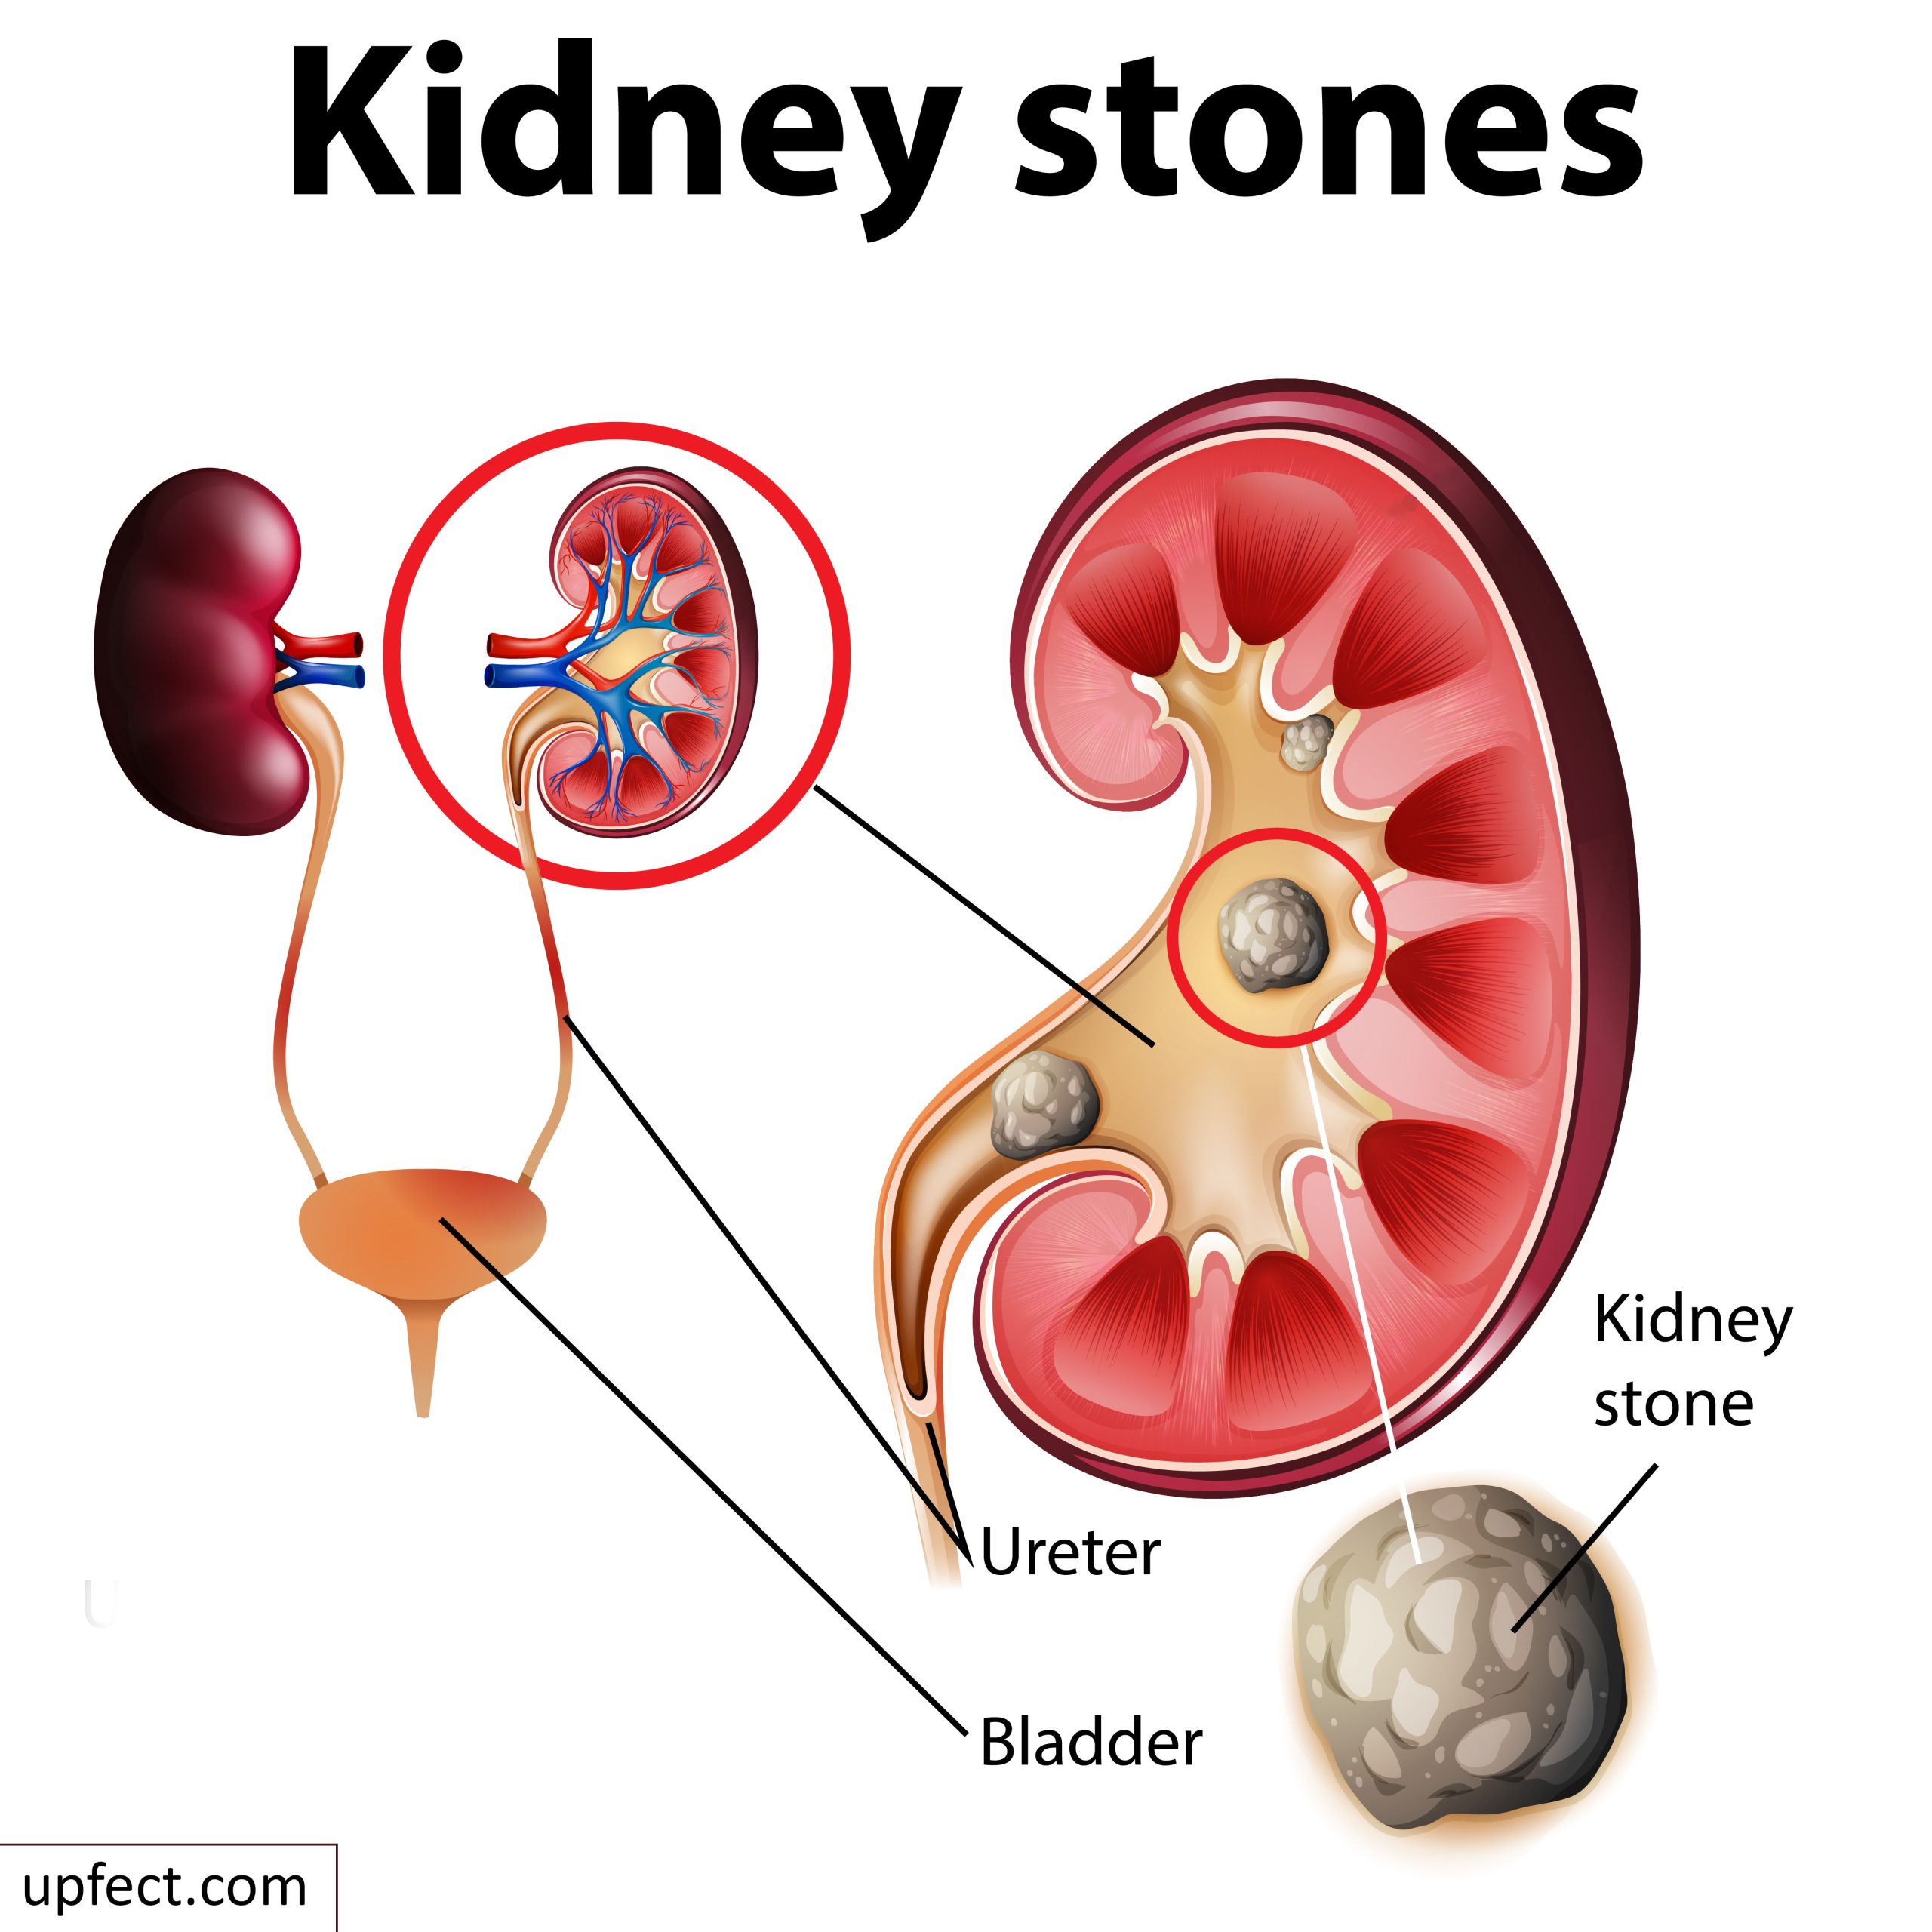 Kidney stone prevention